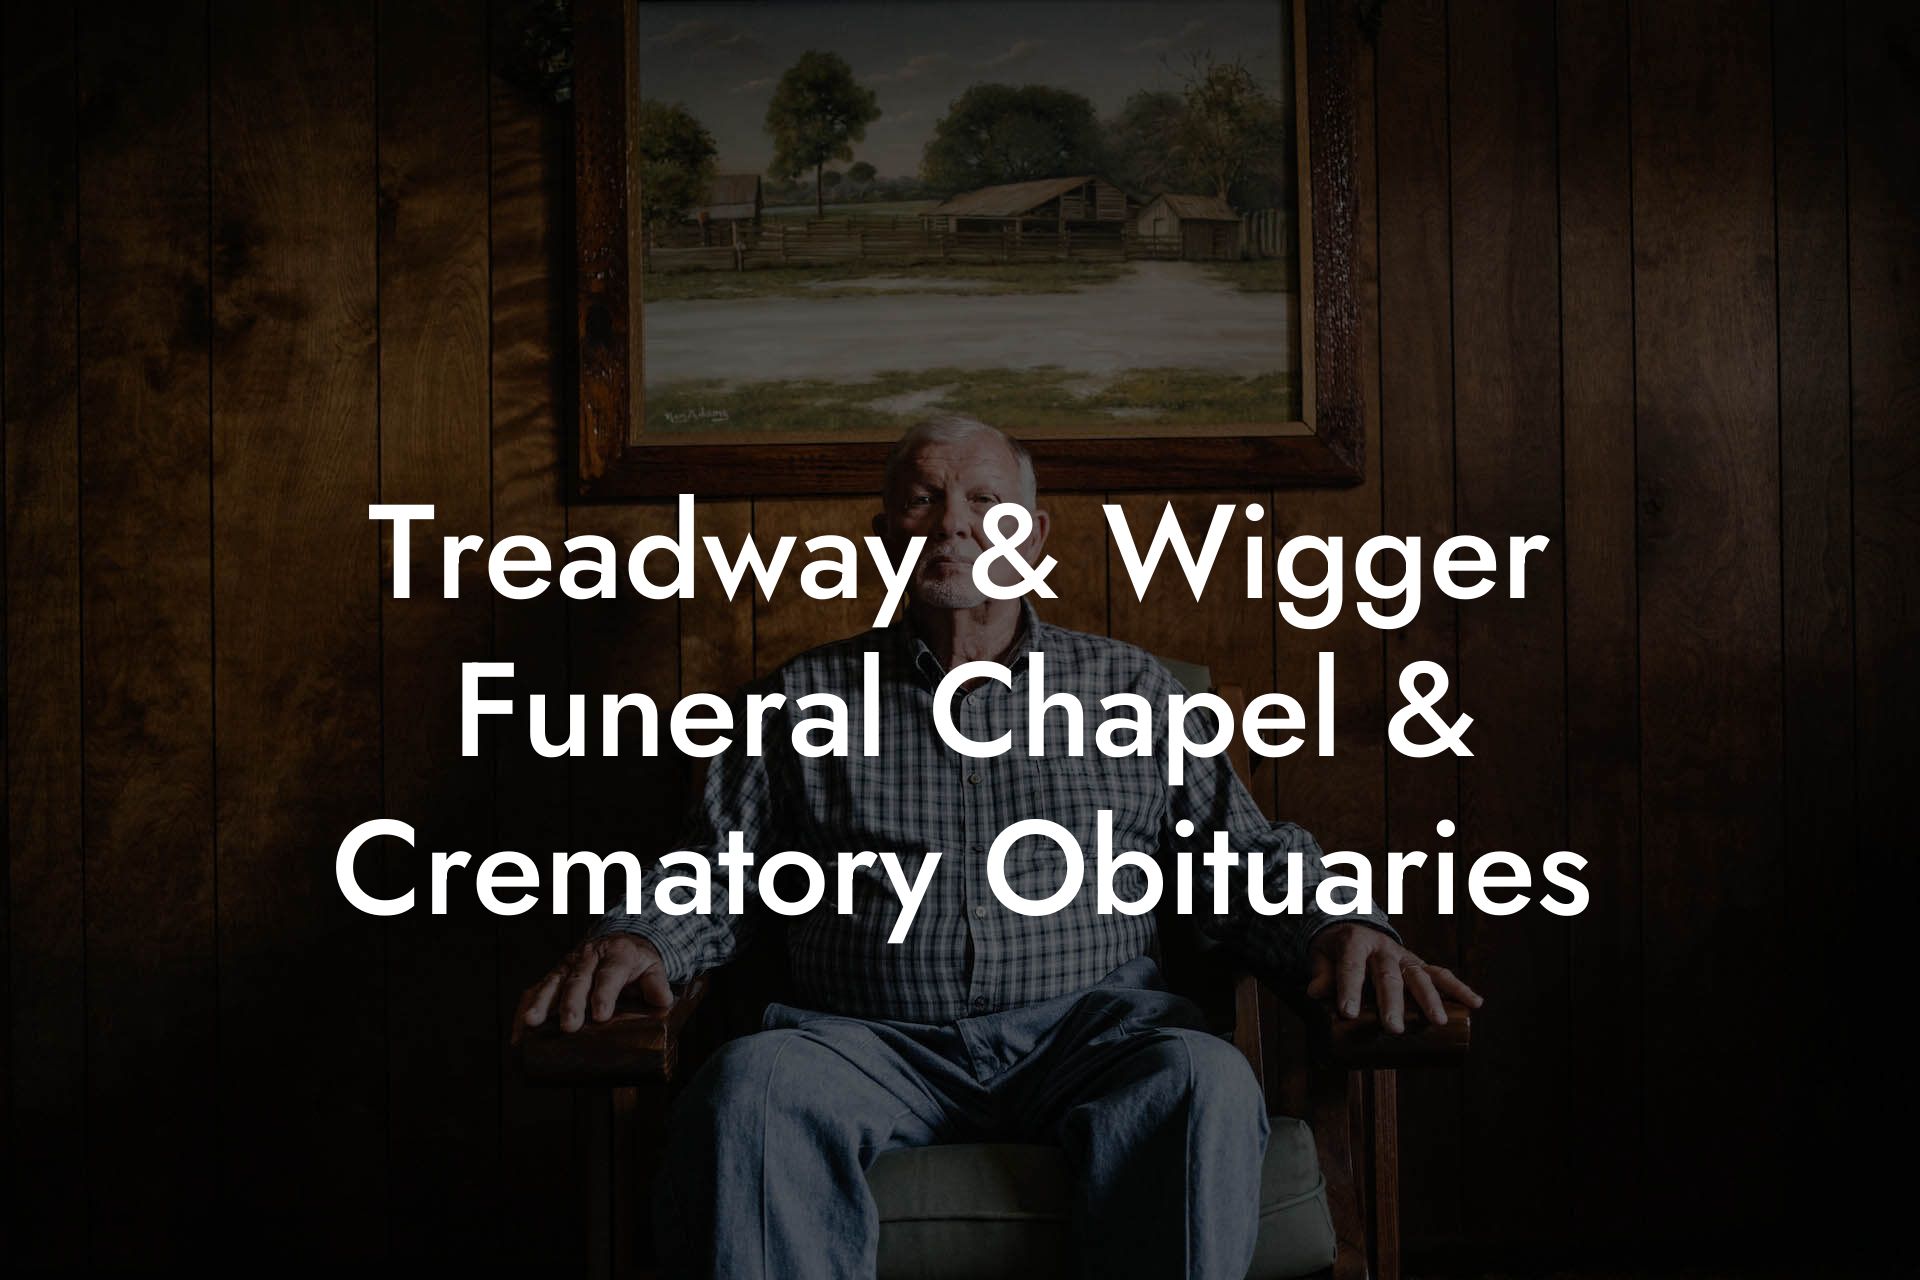 Treadway & Wigger Funeral Chapel & Crematory Obituaries